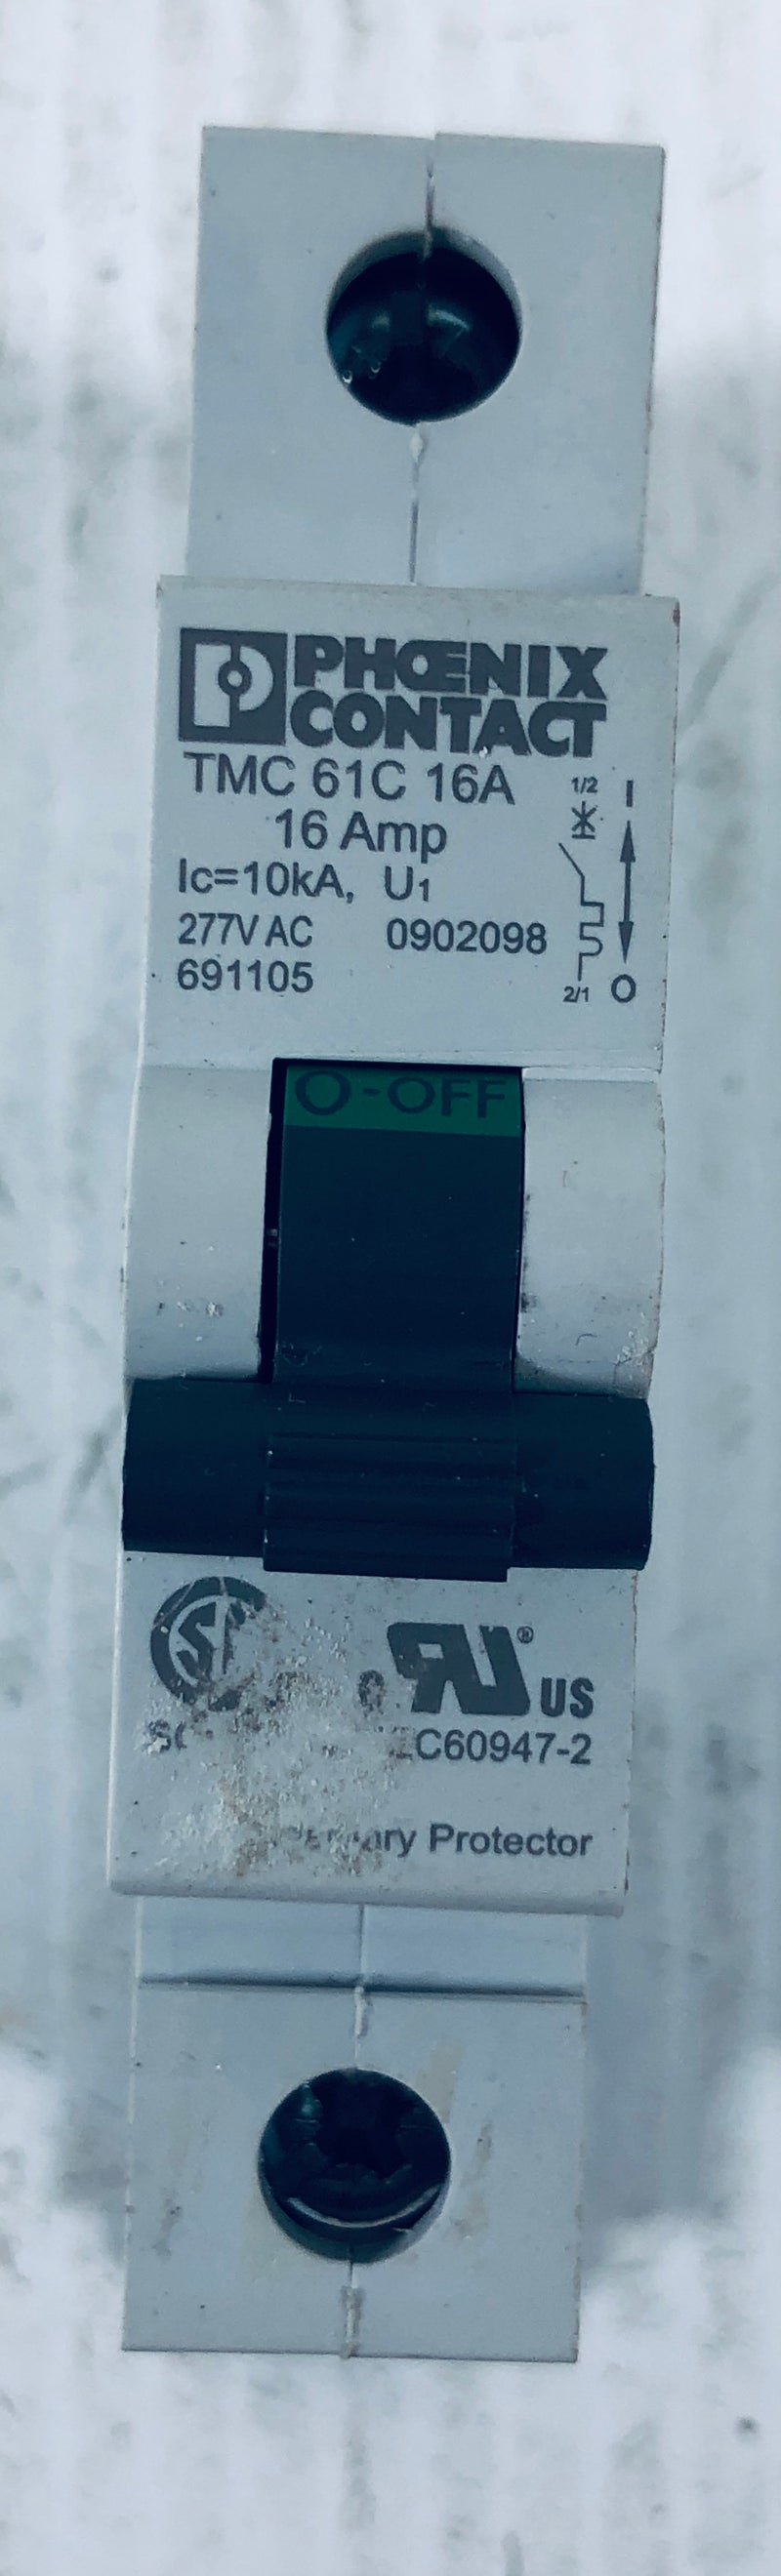 Phoenix Contact Circuit Breaker TMC 61C 16A 16 AMP